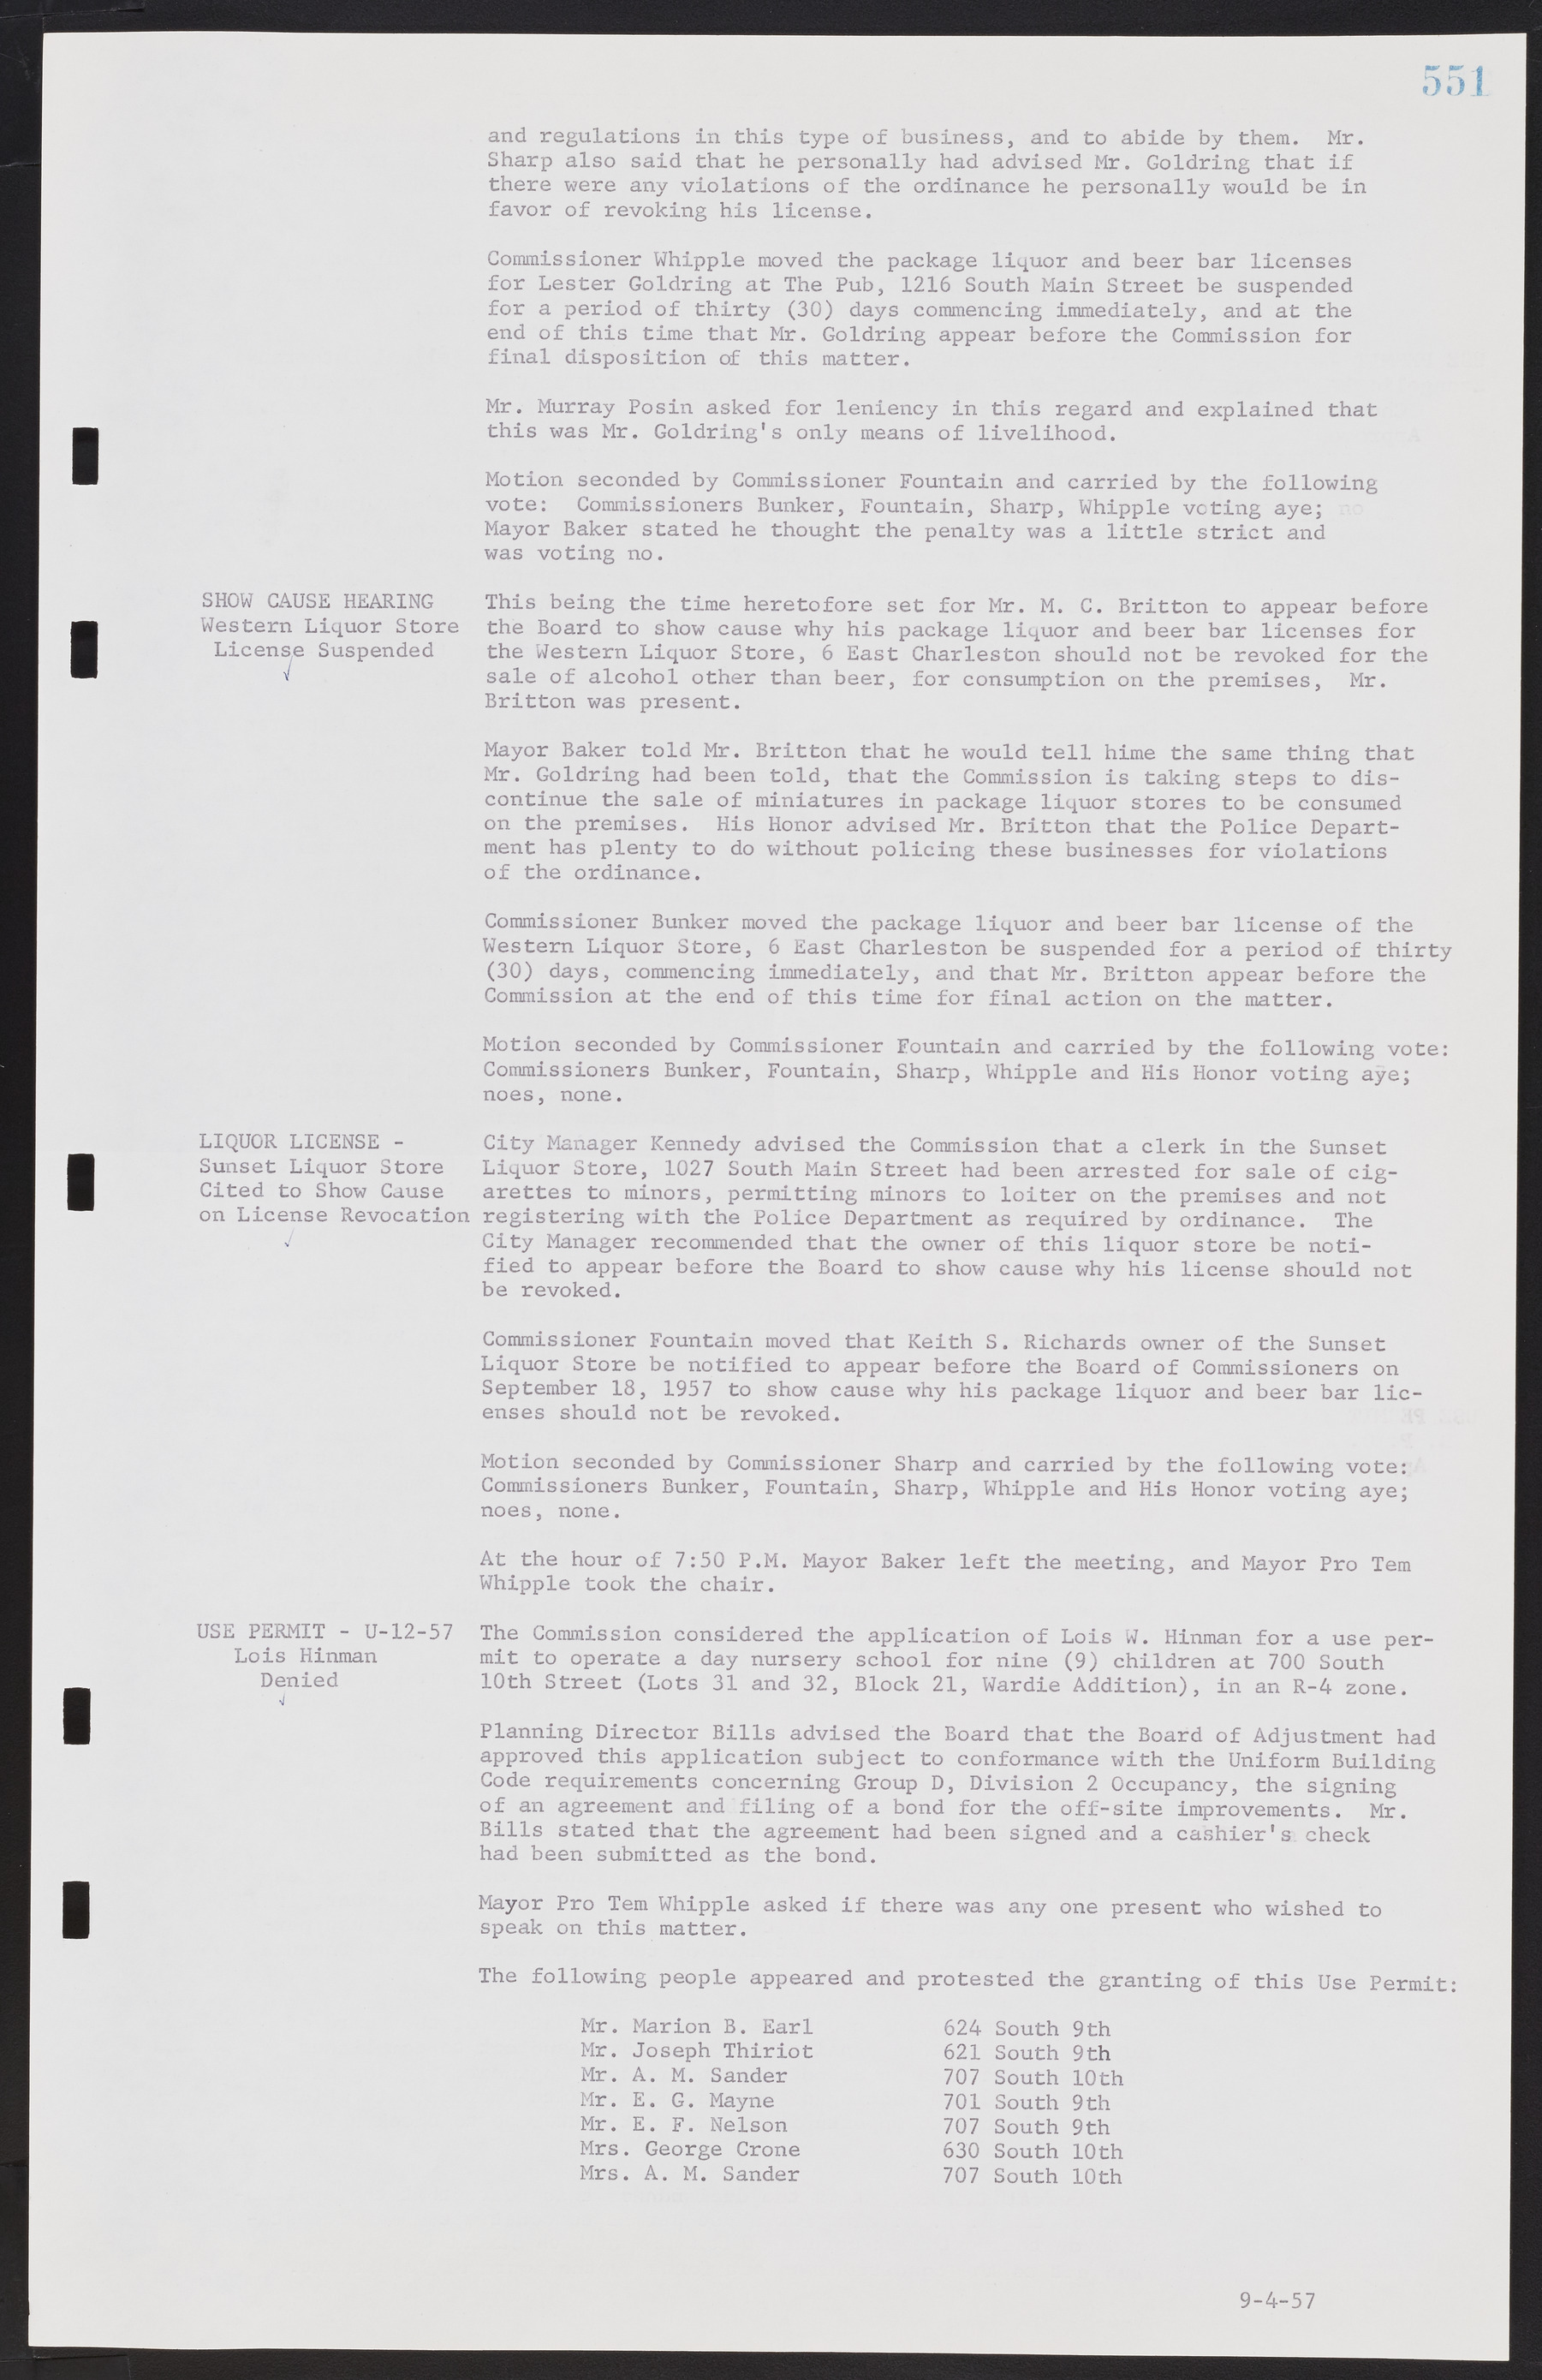 Las Vegas City Commission Minutes, September 21, 1955 to November 20, 1957, lvc000010-571